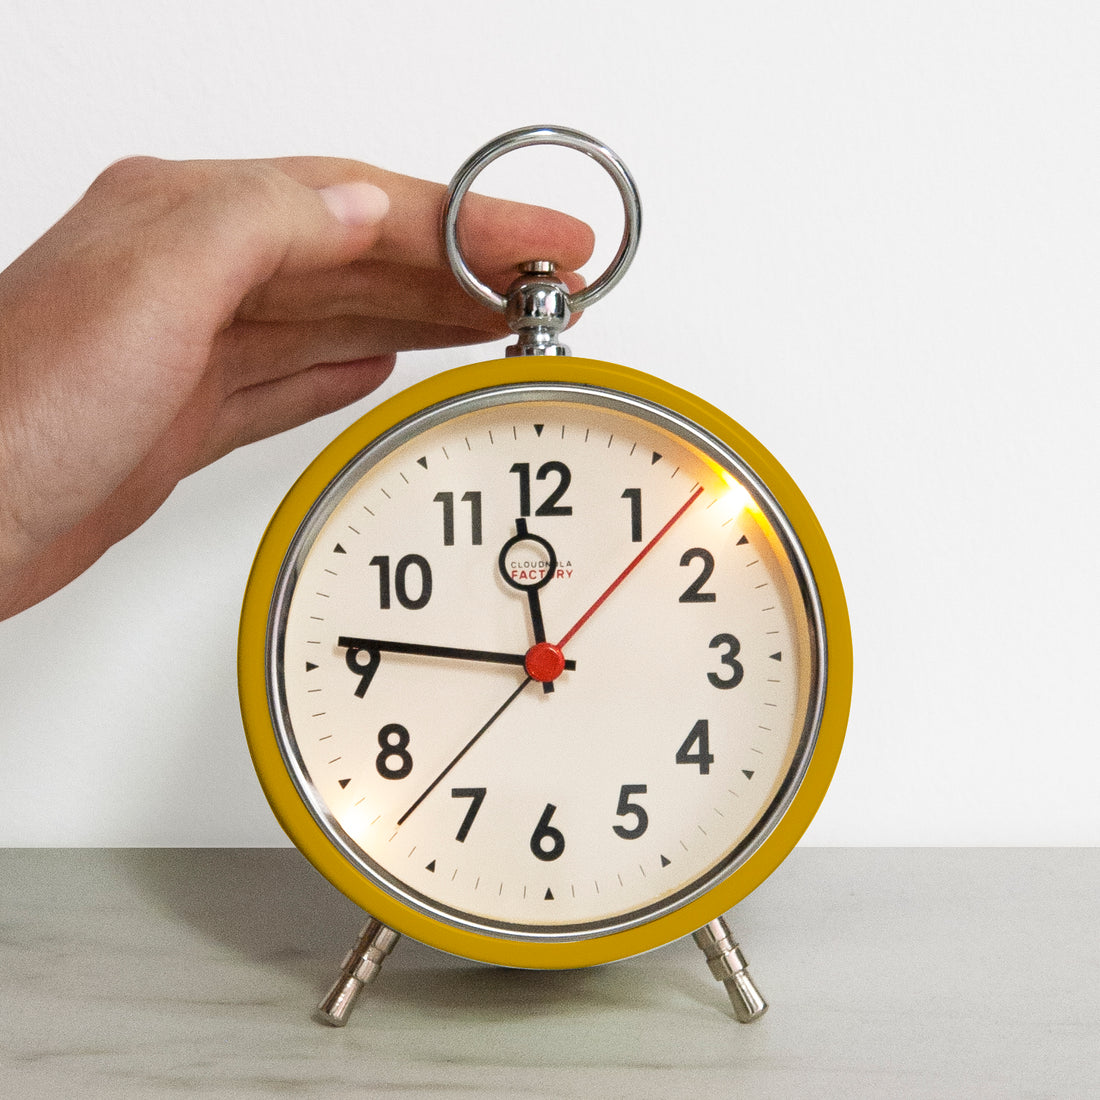 How to Use an Analog Alarm Clock